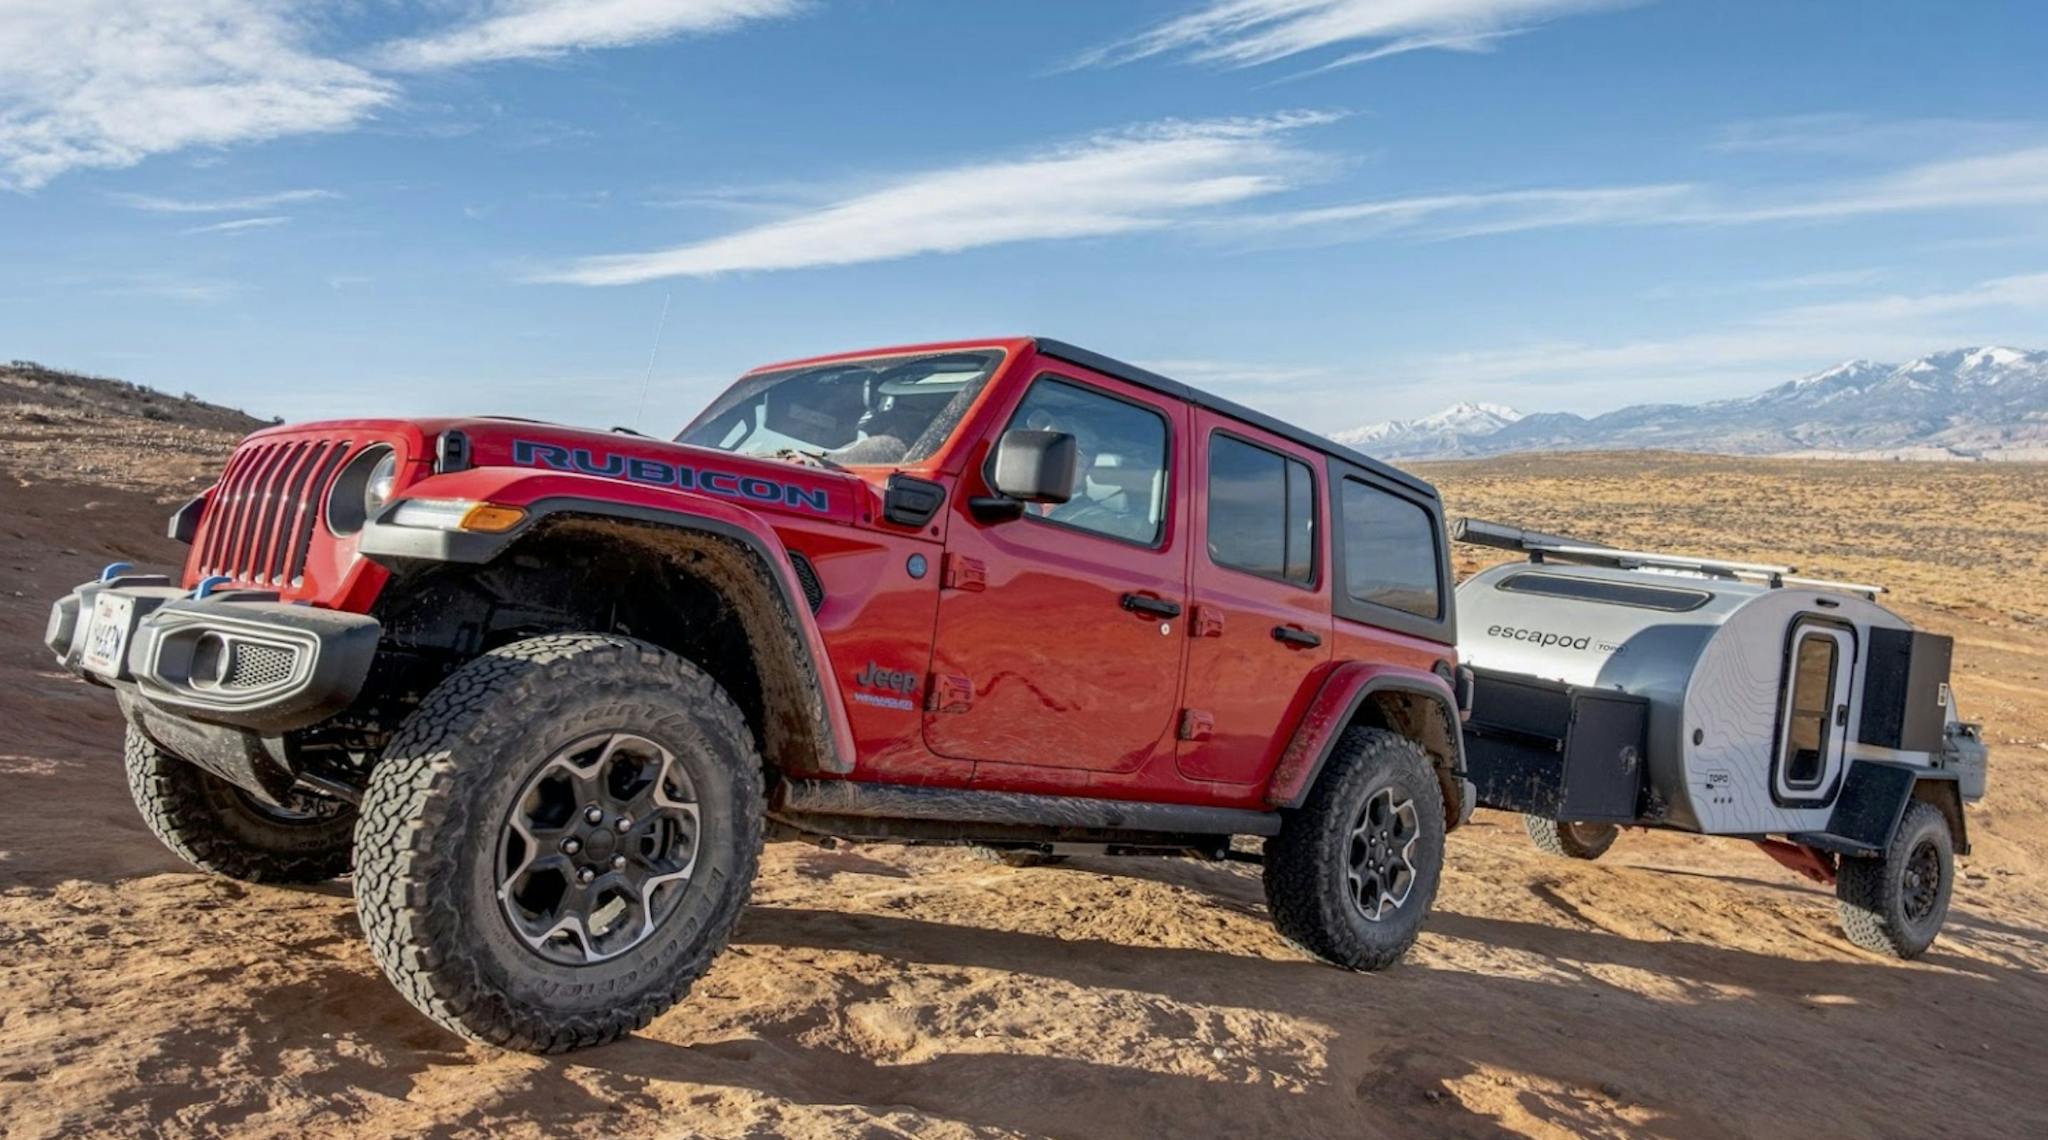 Bright red Jeep Rubicon tows an Escapod up a rocky desert landscape.